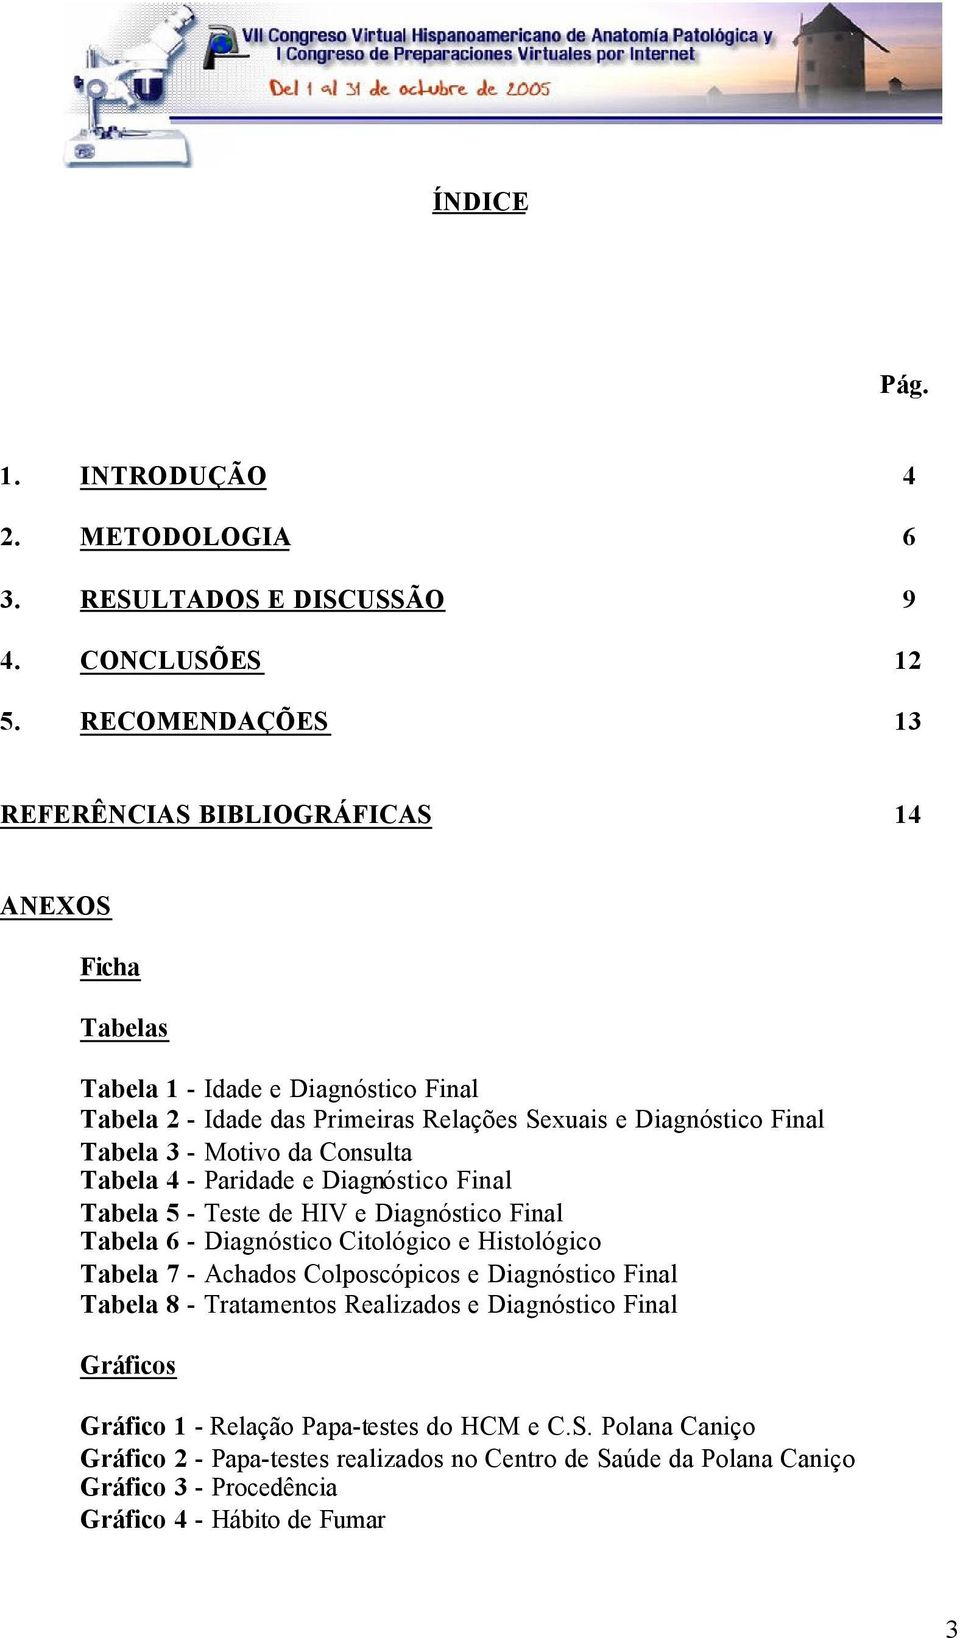 - Motivo da Consulta Tabela 4 - Paridade e Diagnóstico Final Tabela 5 - Teste de HIV e Diagnóstico Final Tabela 6 - Diagnóstico Citológico e Histológico Tabela 7 - Achados